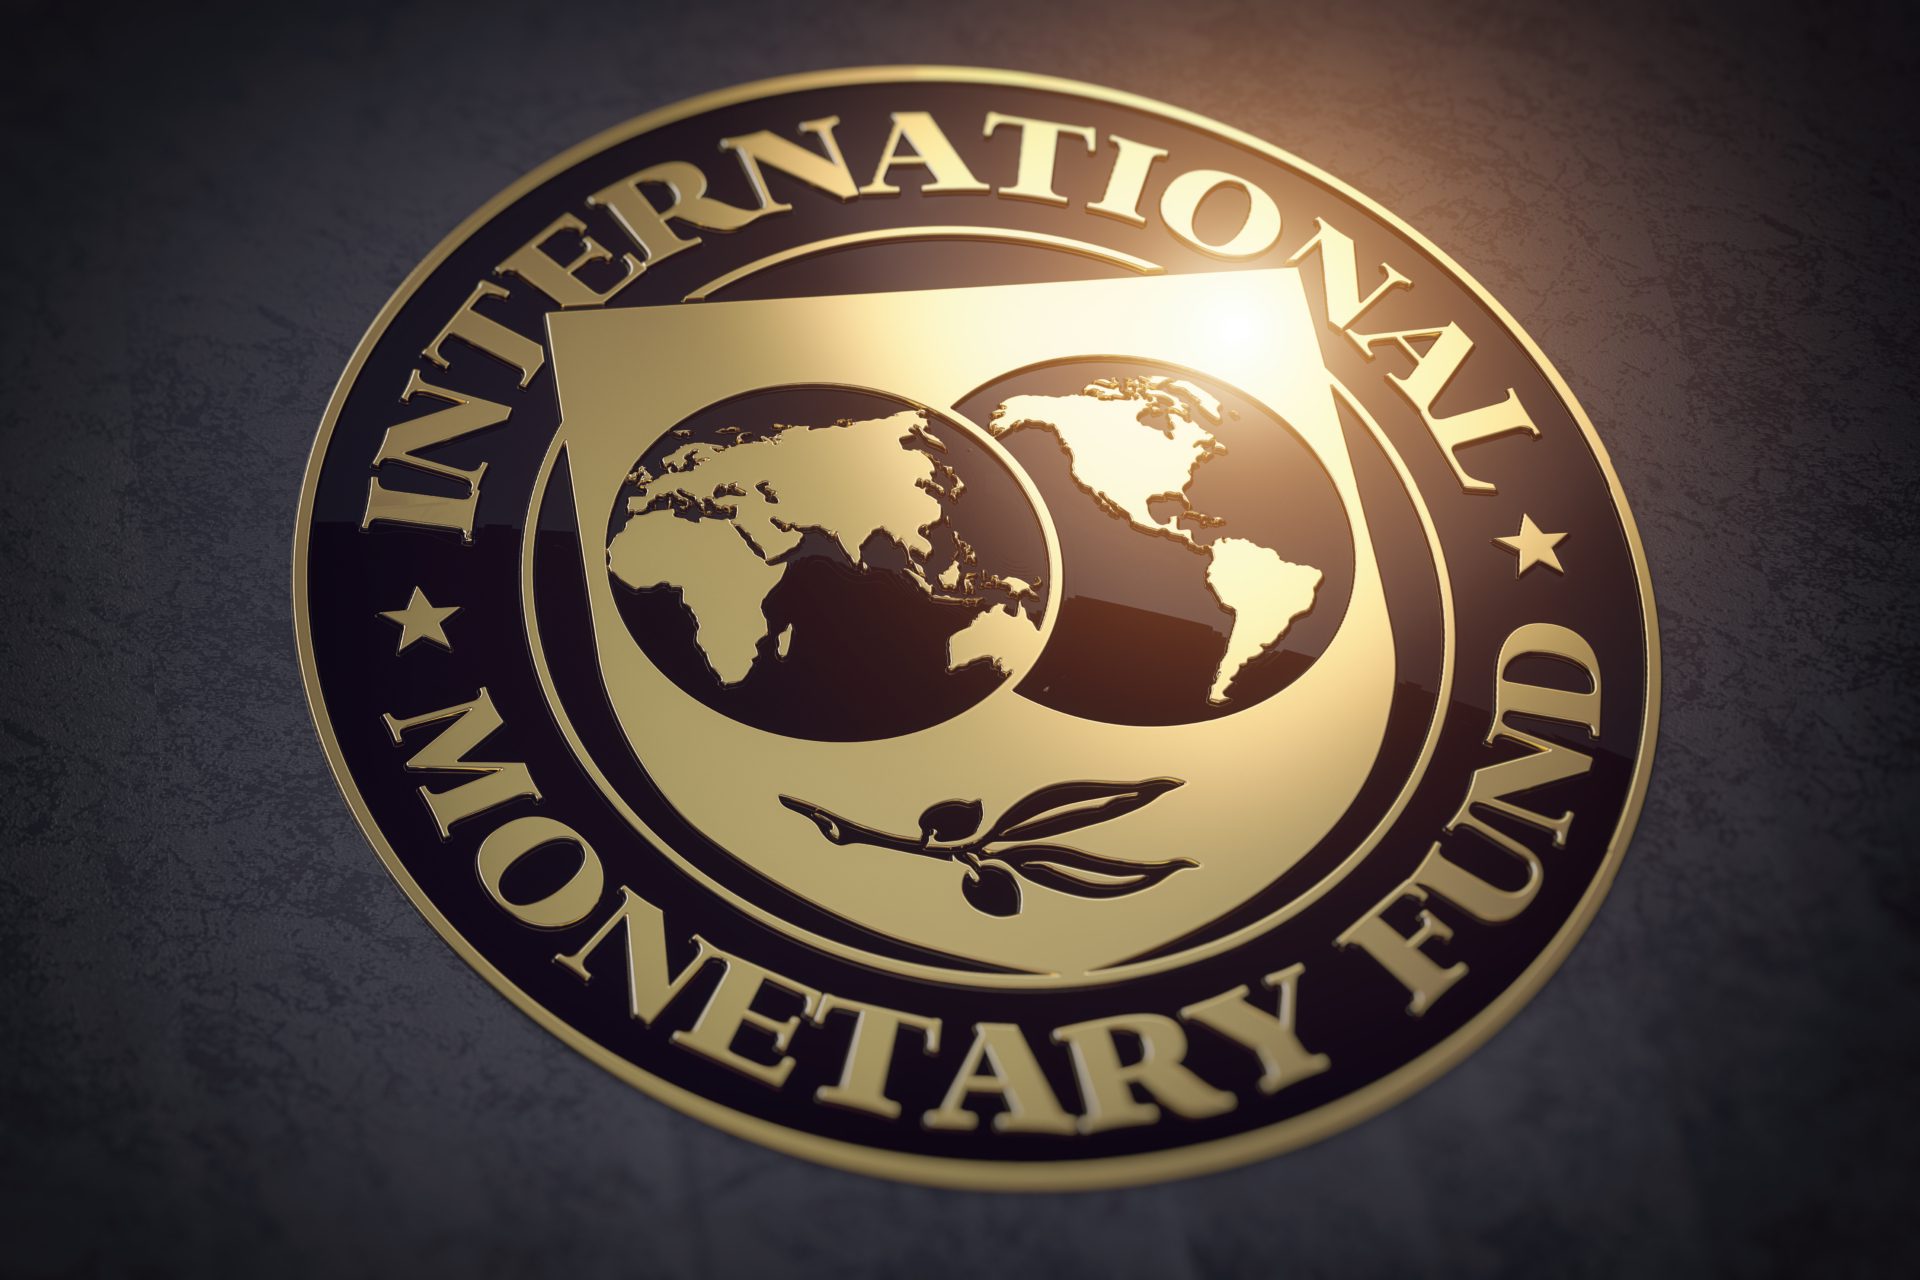 IMF, internationaal monetair fonds